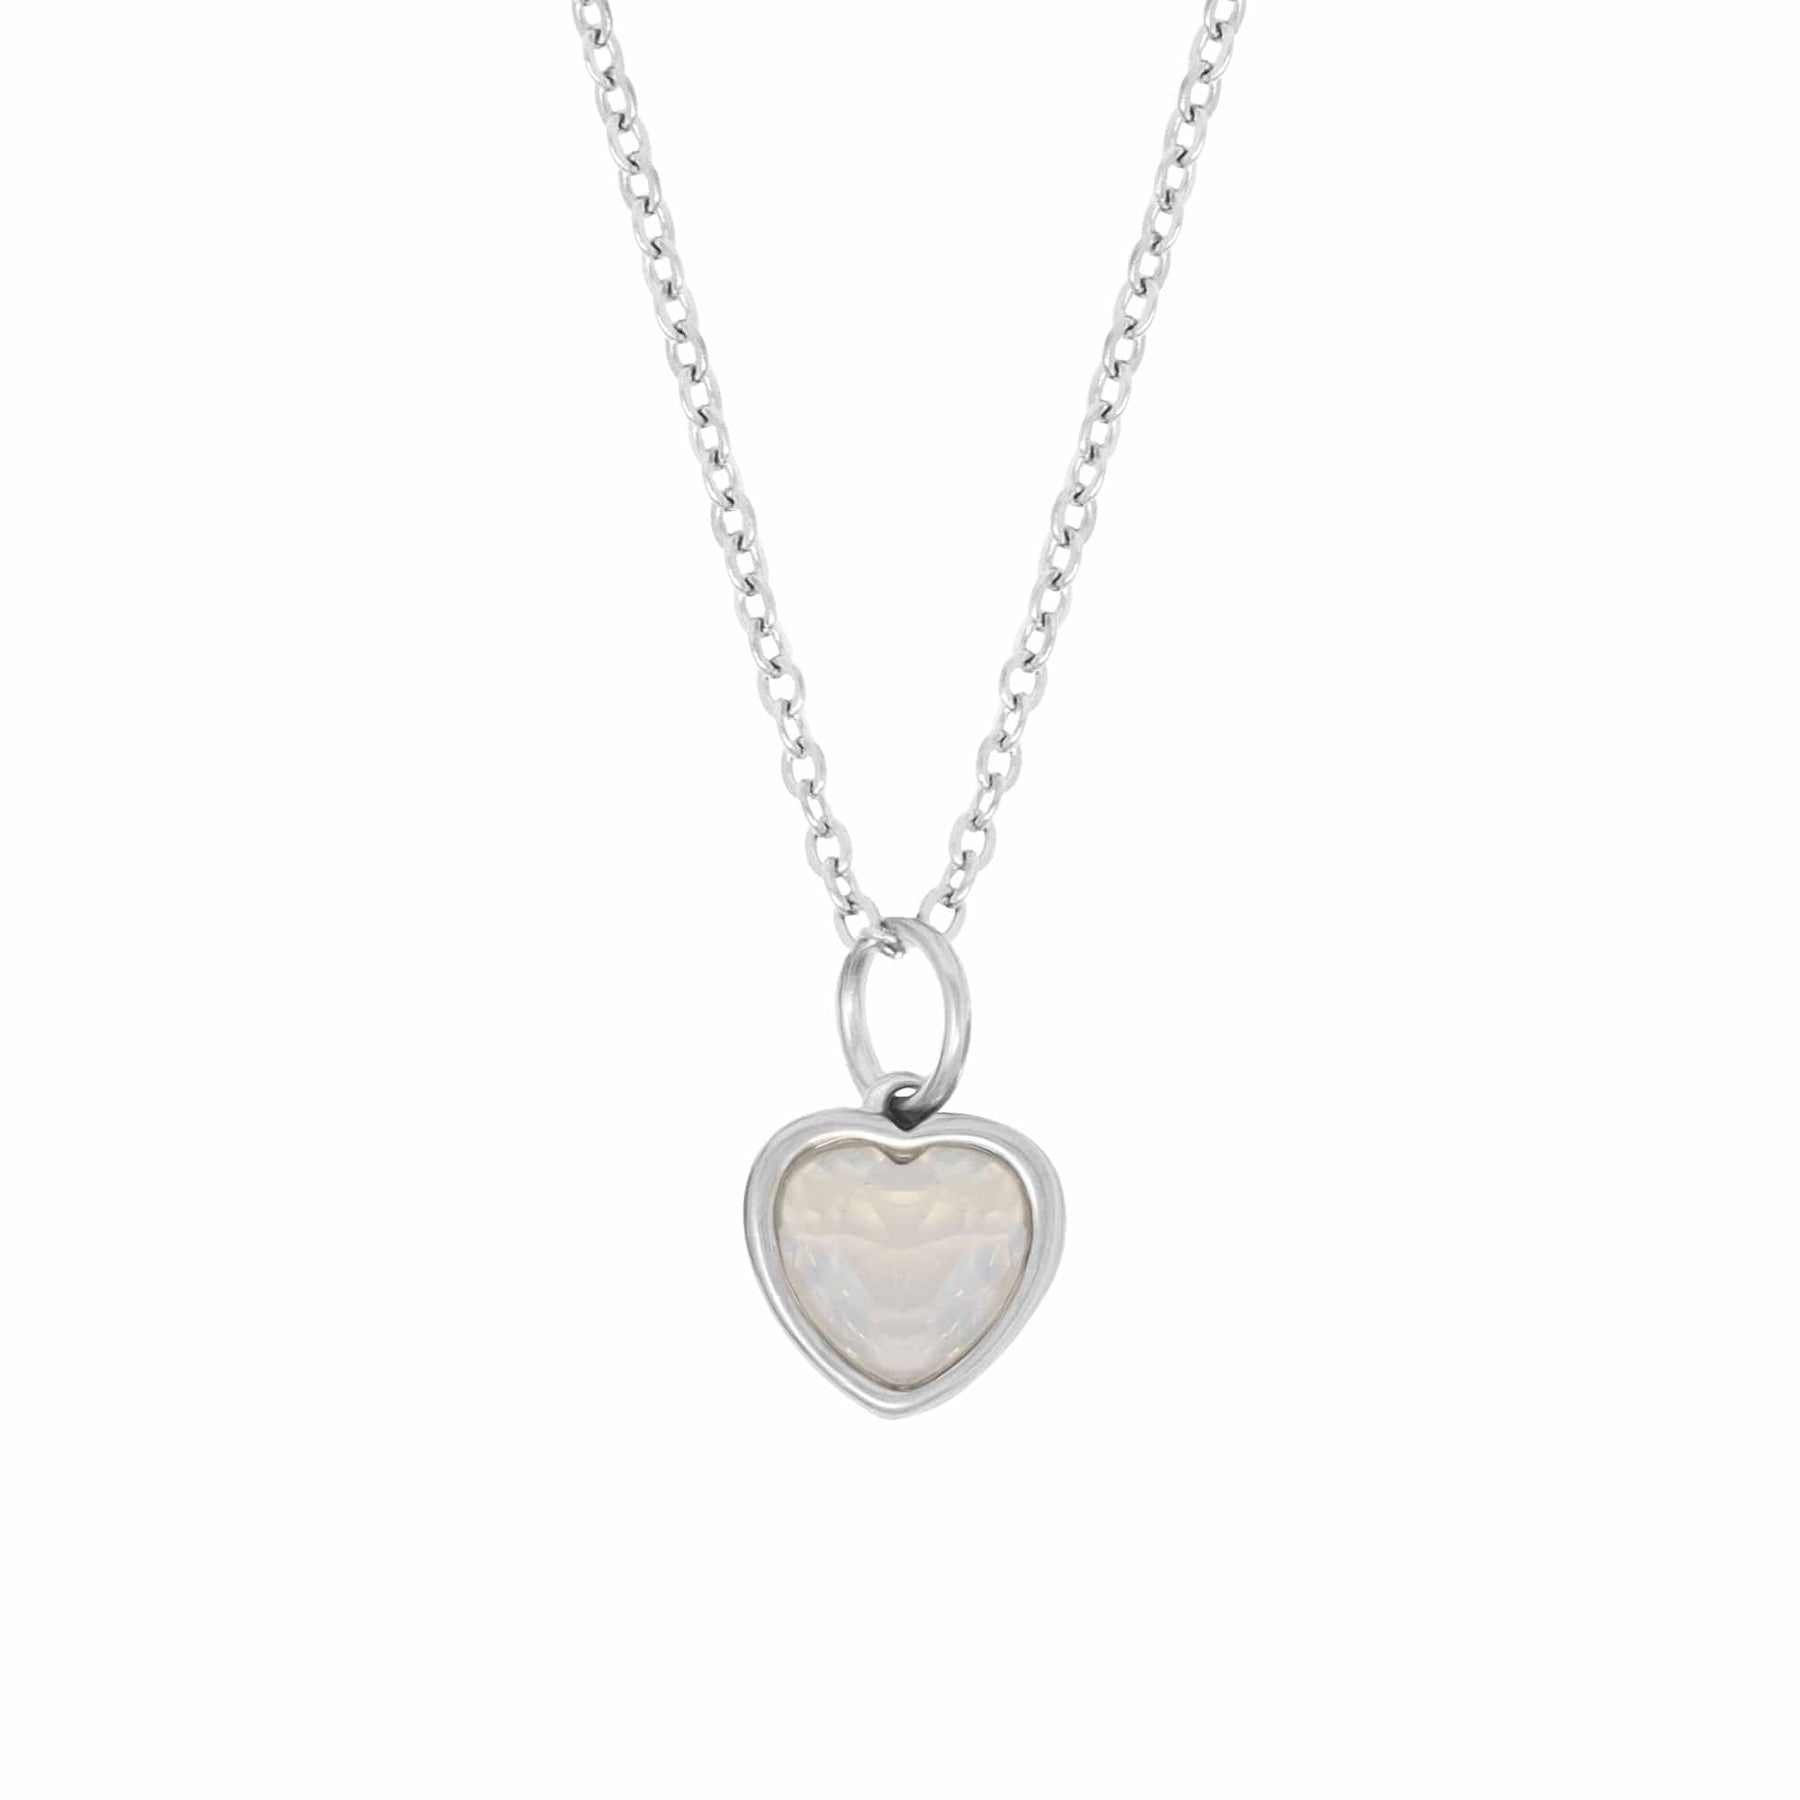 BohoMoon Stainless Steel Love Heart Birthstone Necklace Silver / November